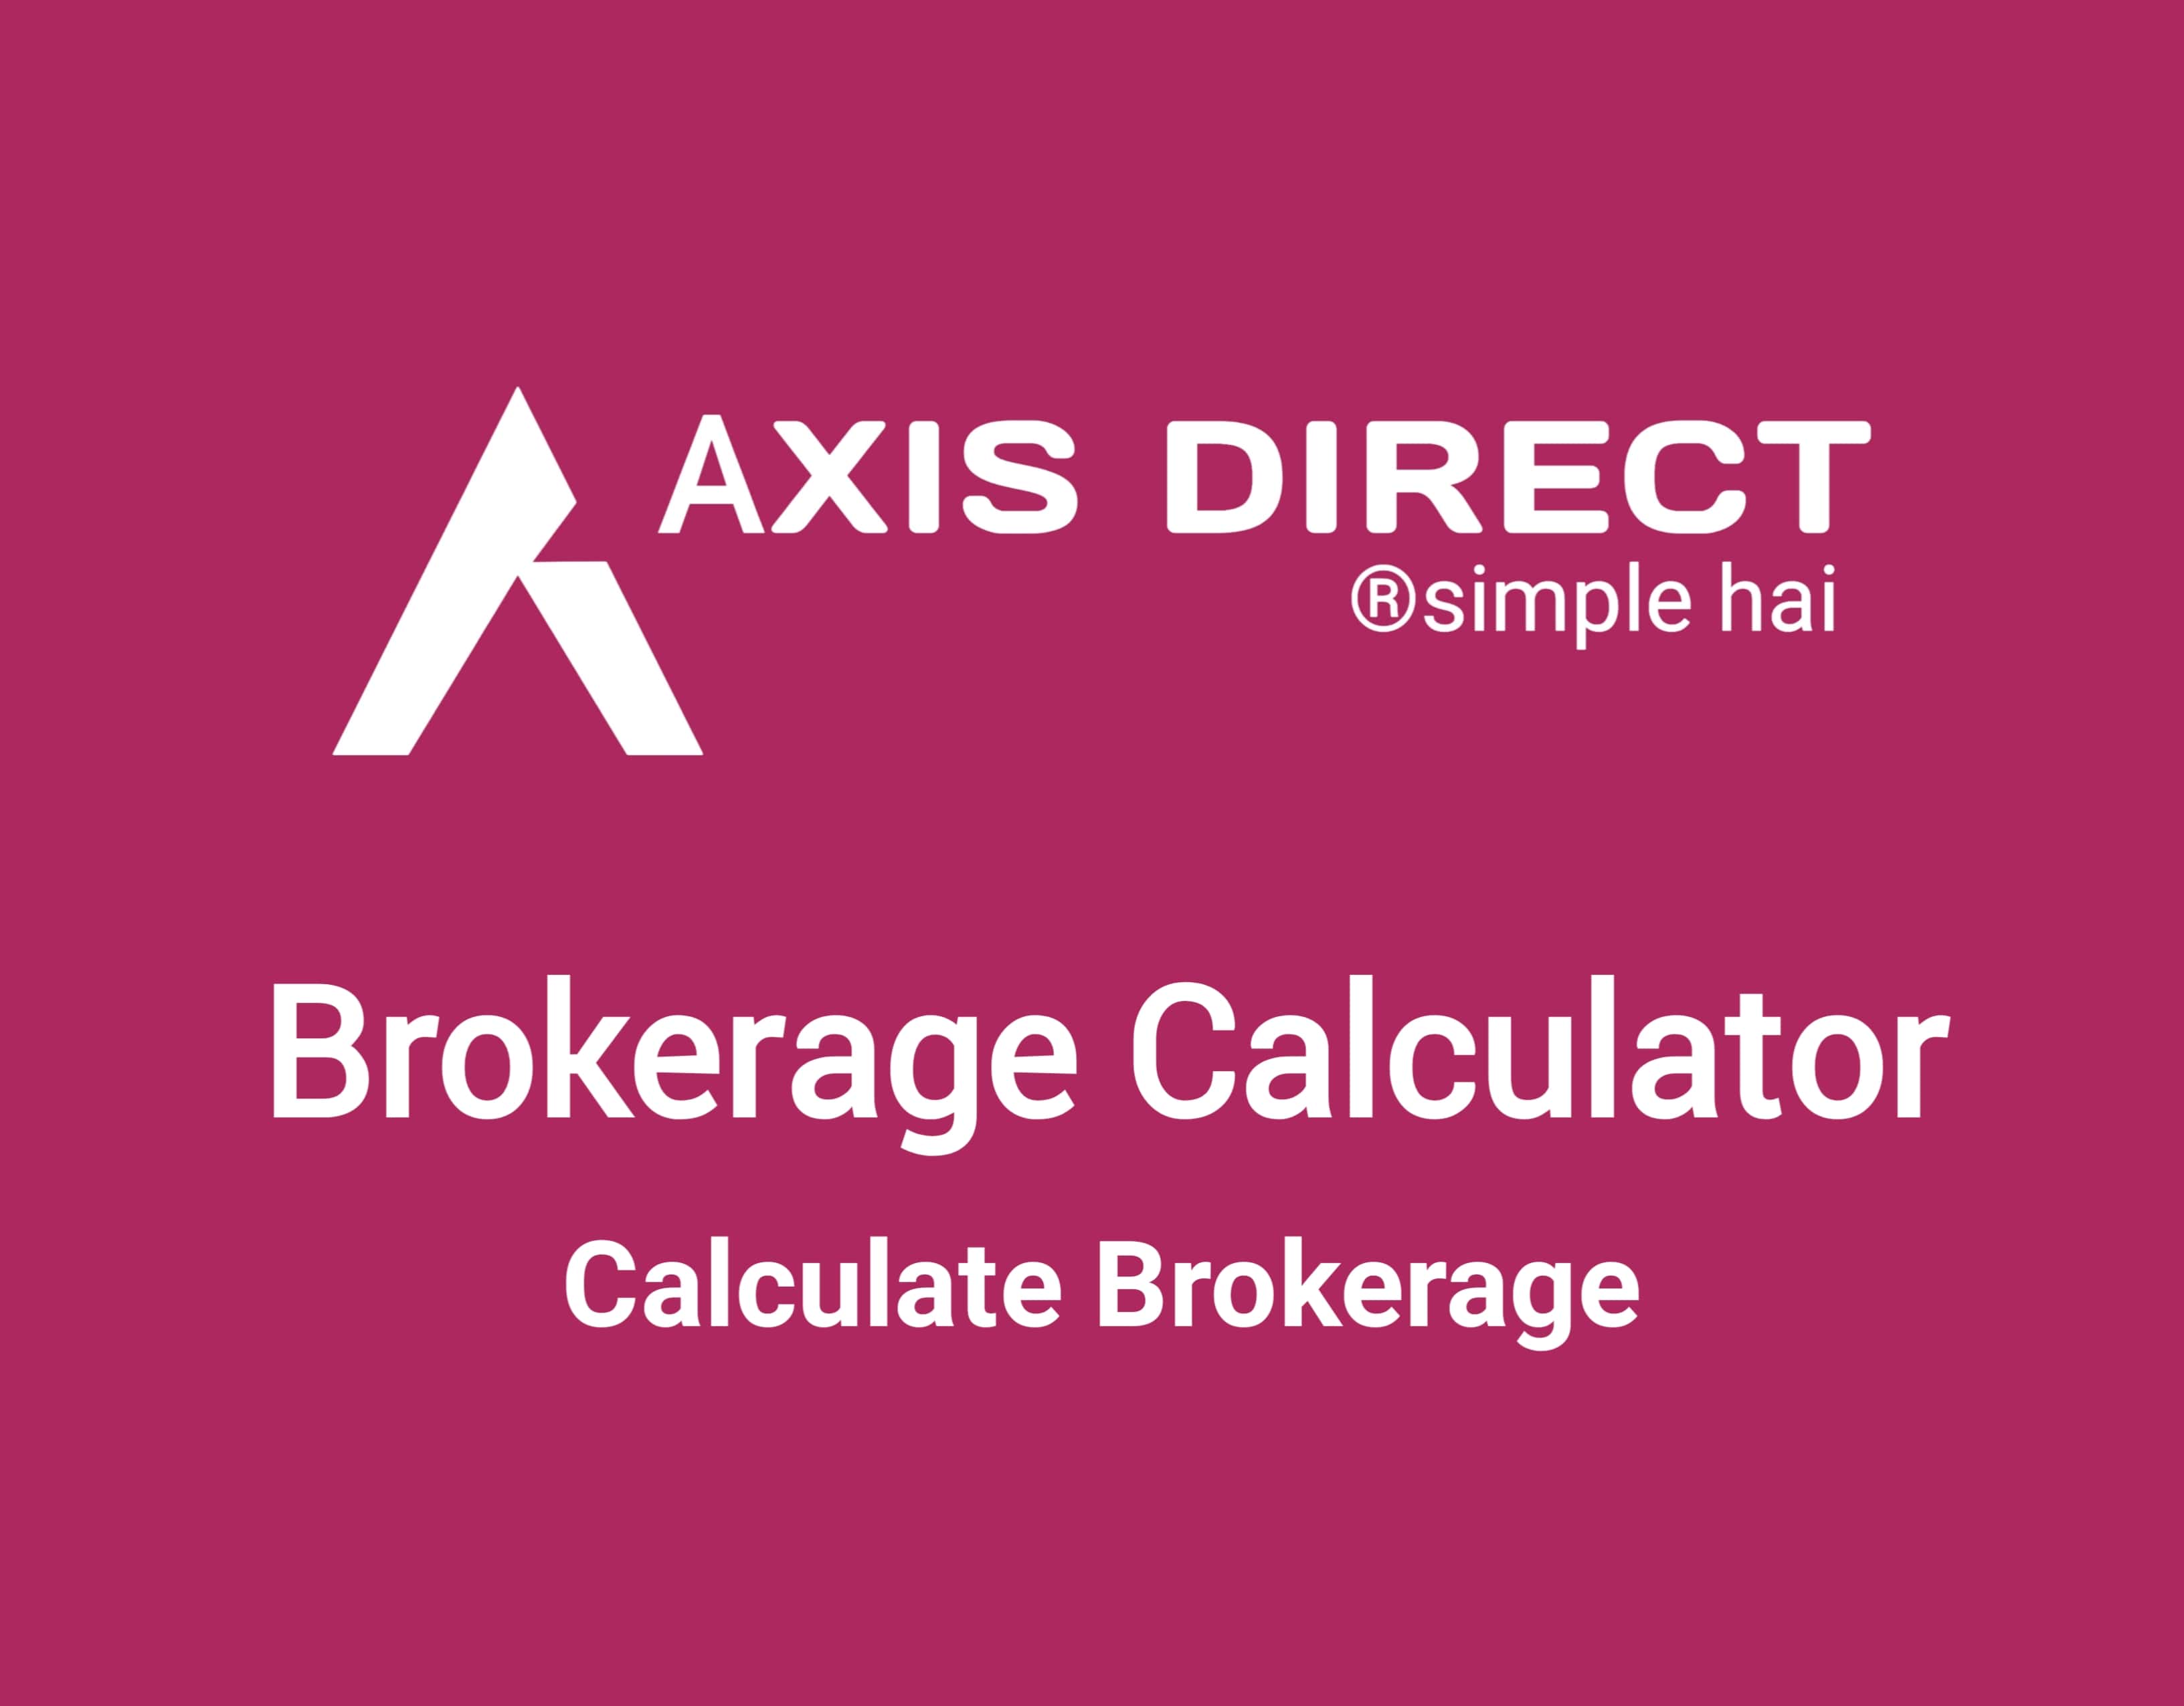 Axis Direct Brokerage Calculator